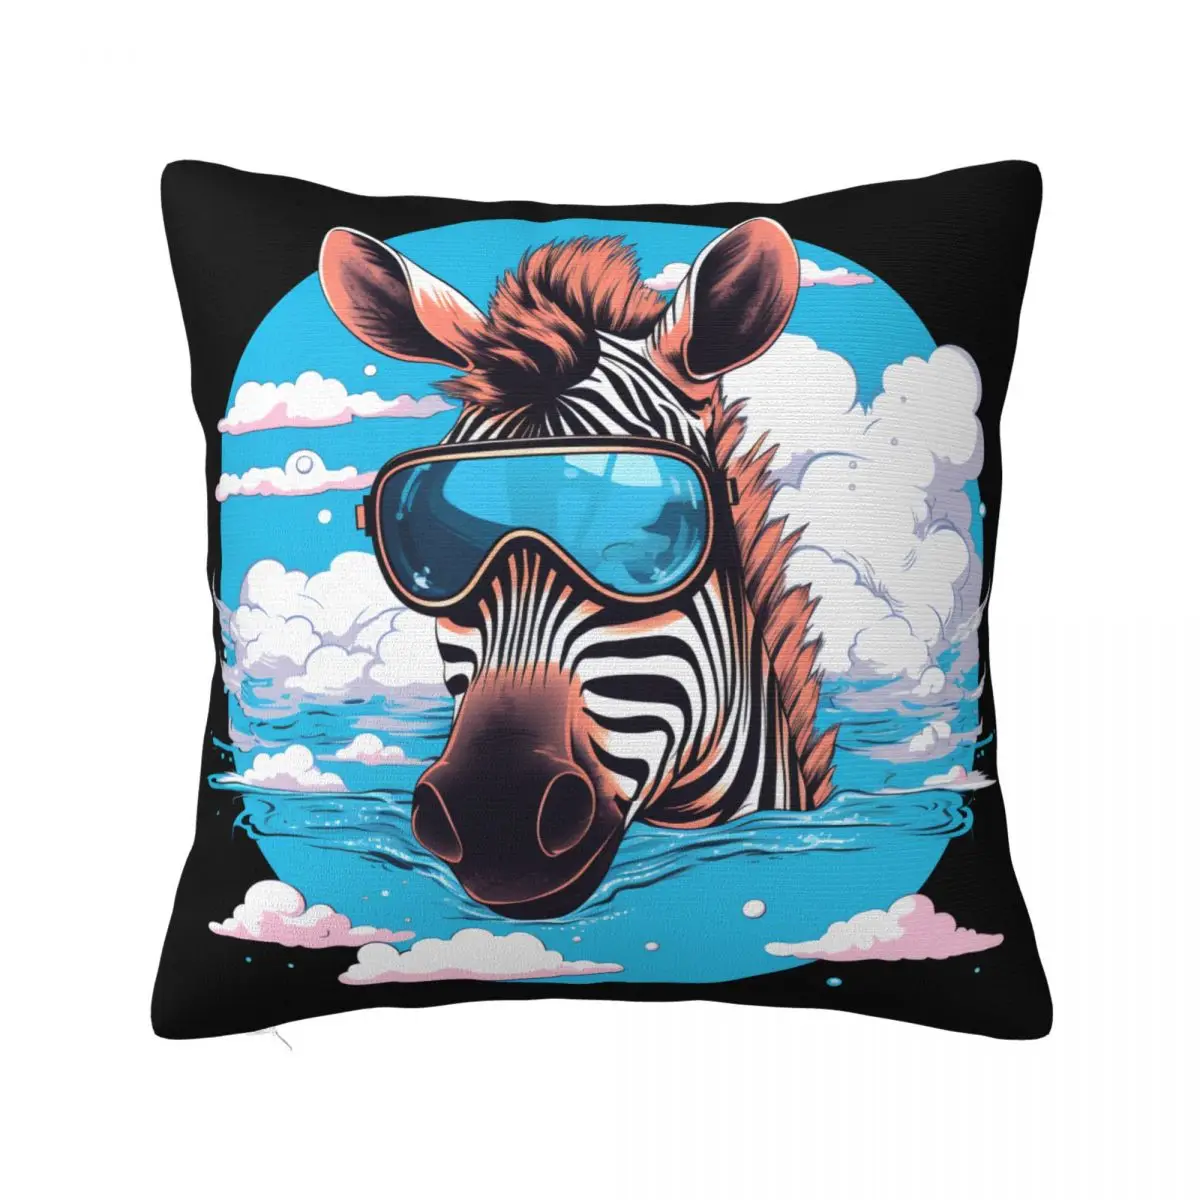 

Zebra Pillow Case Sky Landscape Glasses Summer Colored Pillowcase Polyester Hugging Zipper Cover